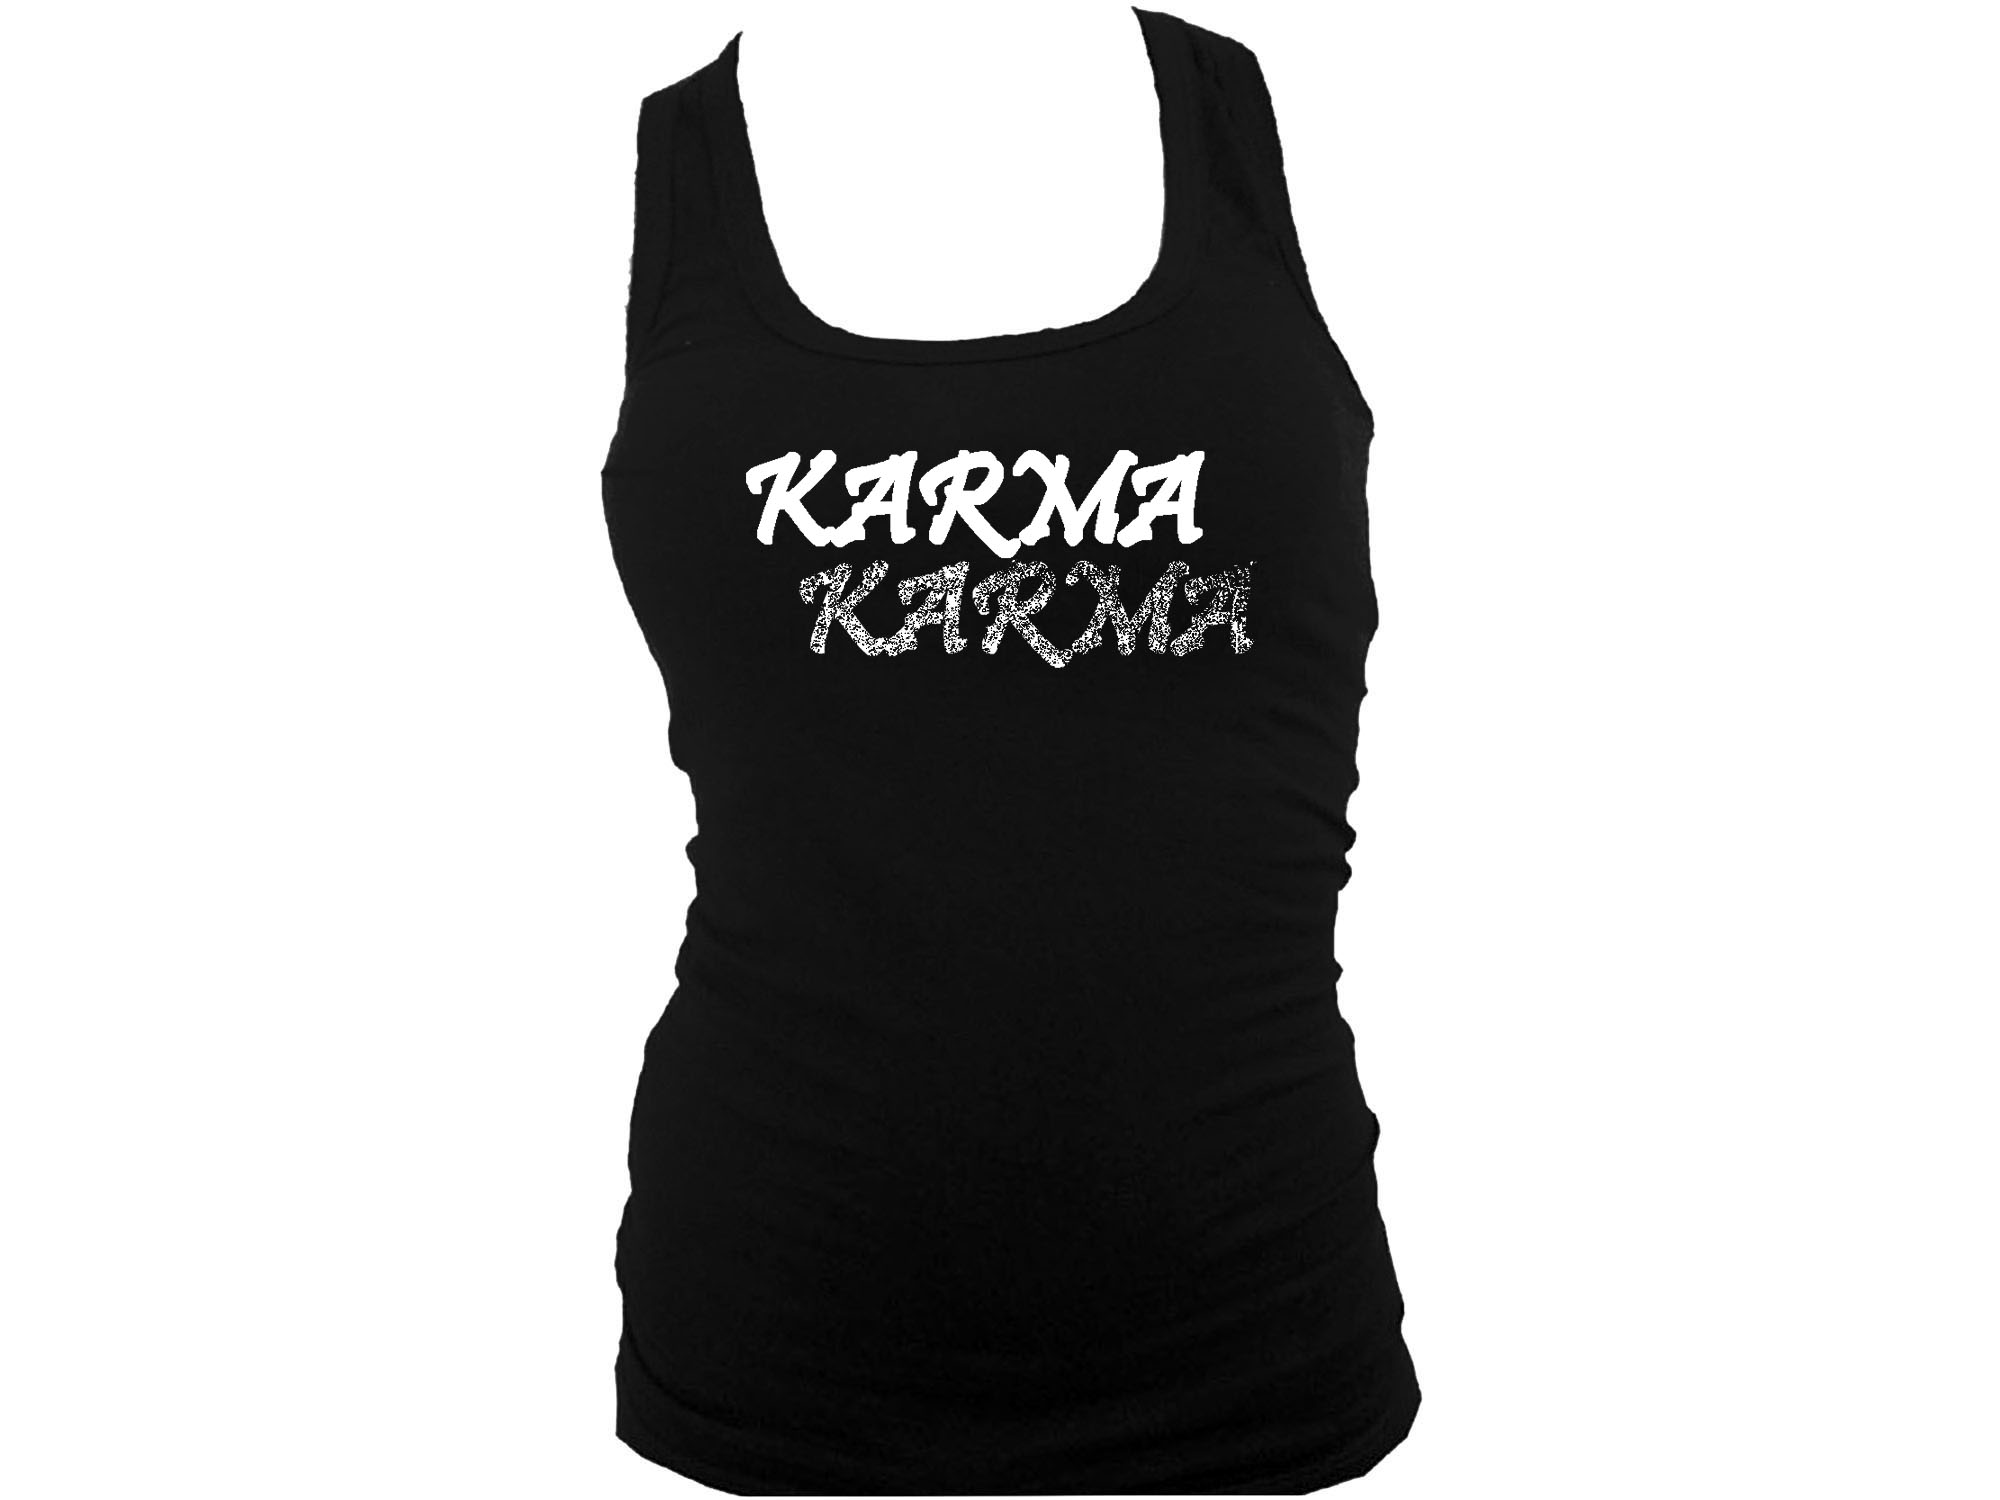 karma yoga wear